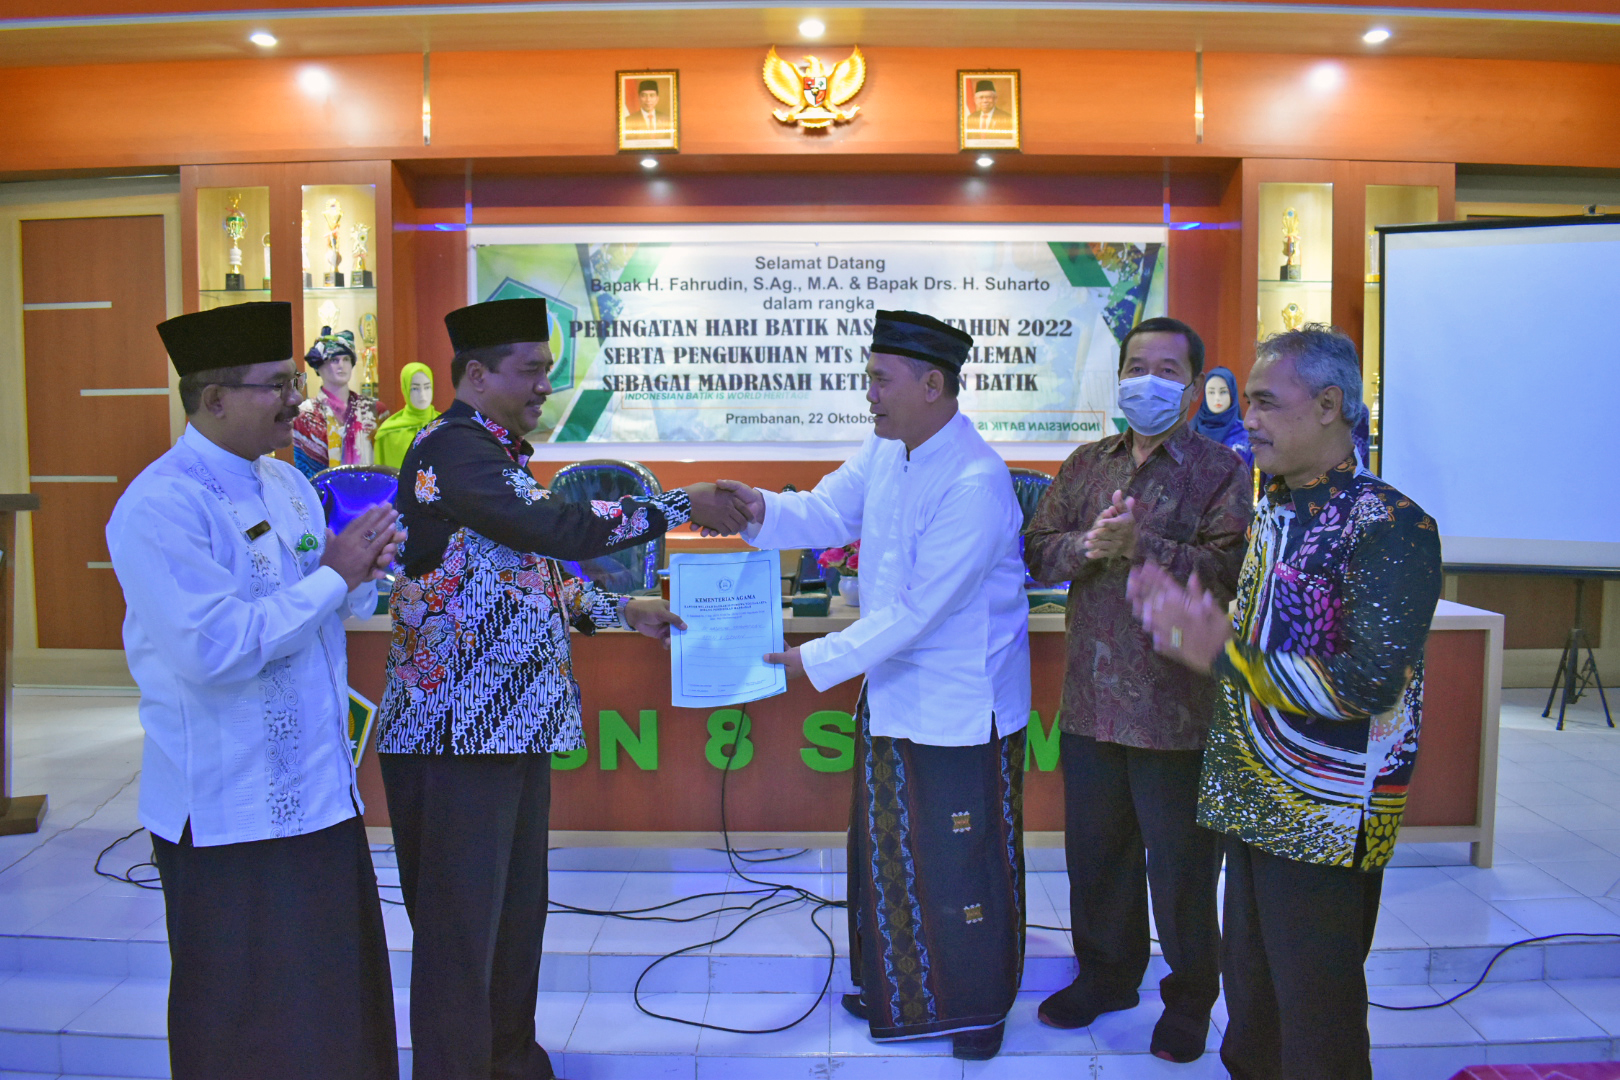 Puncak Peringatan Hari Batik 2022, MTsN 8 Sleman Terima SK Madrasah Ketrampilan Batik